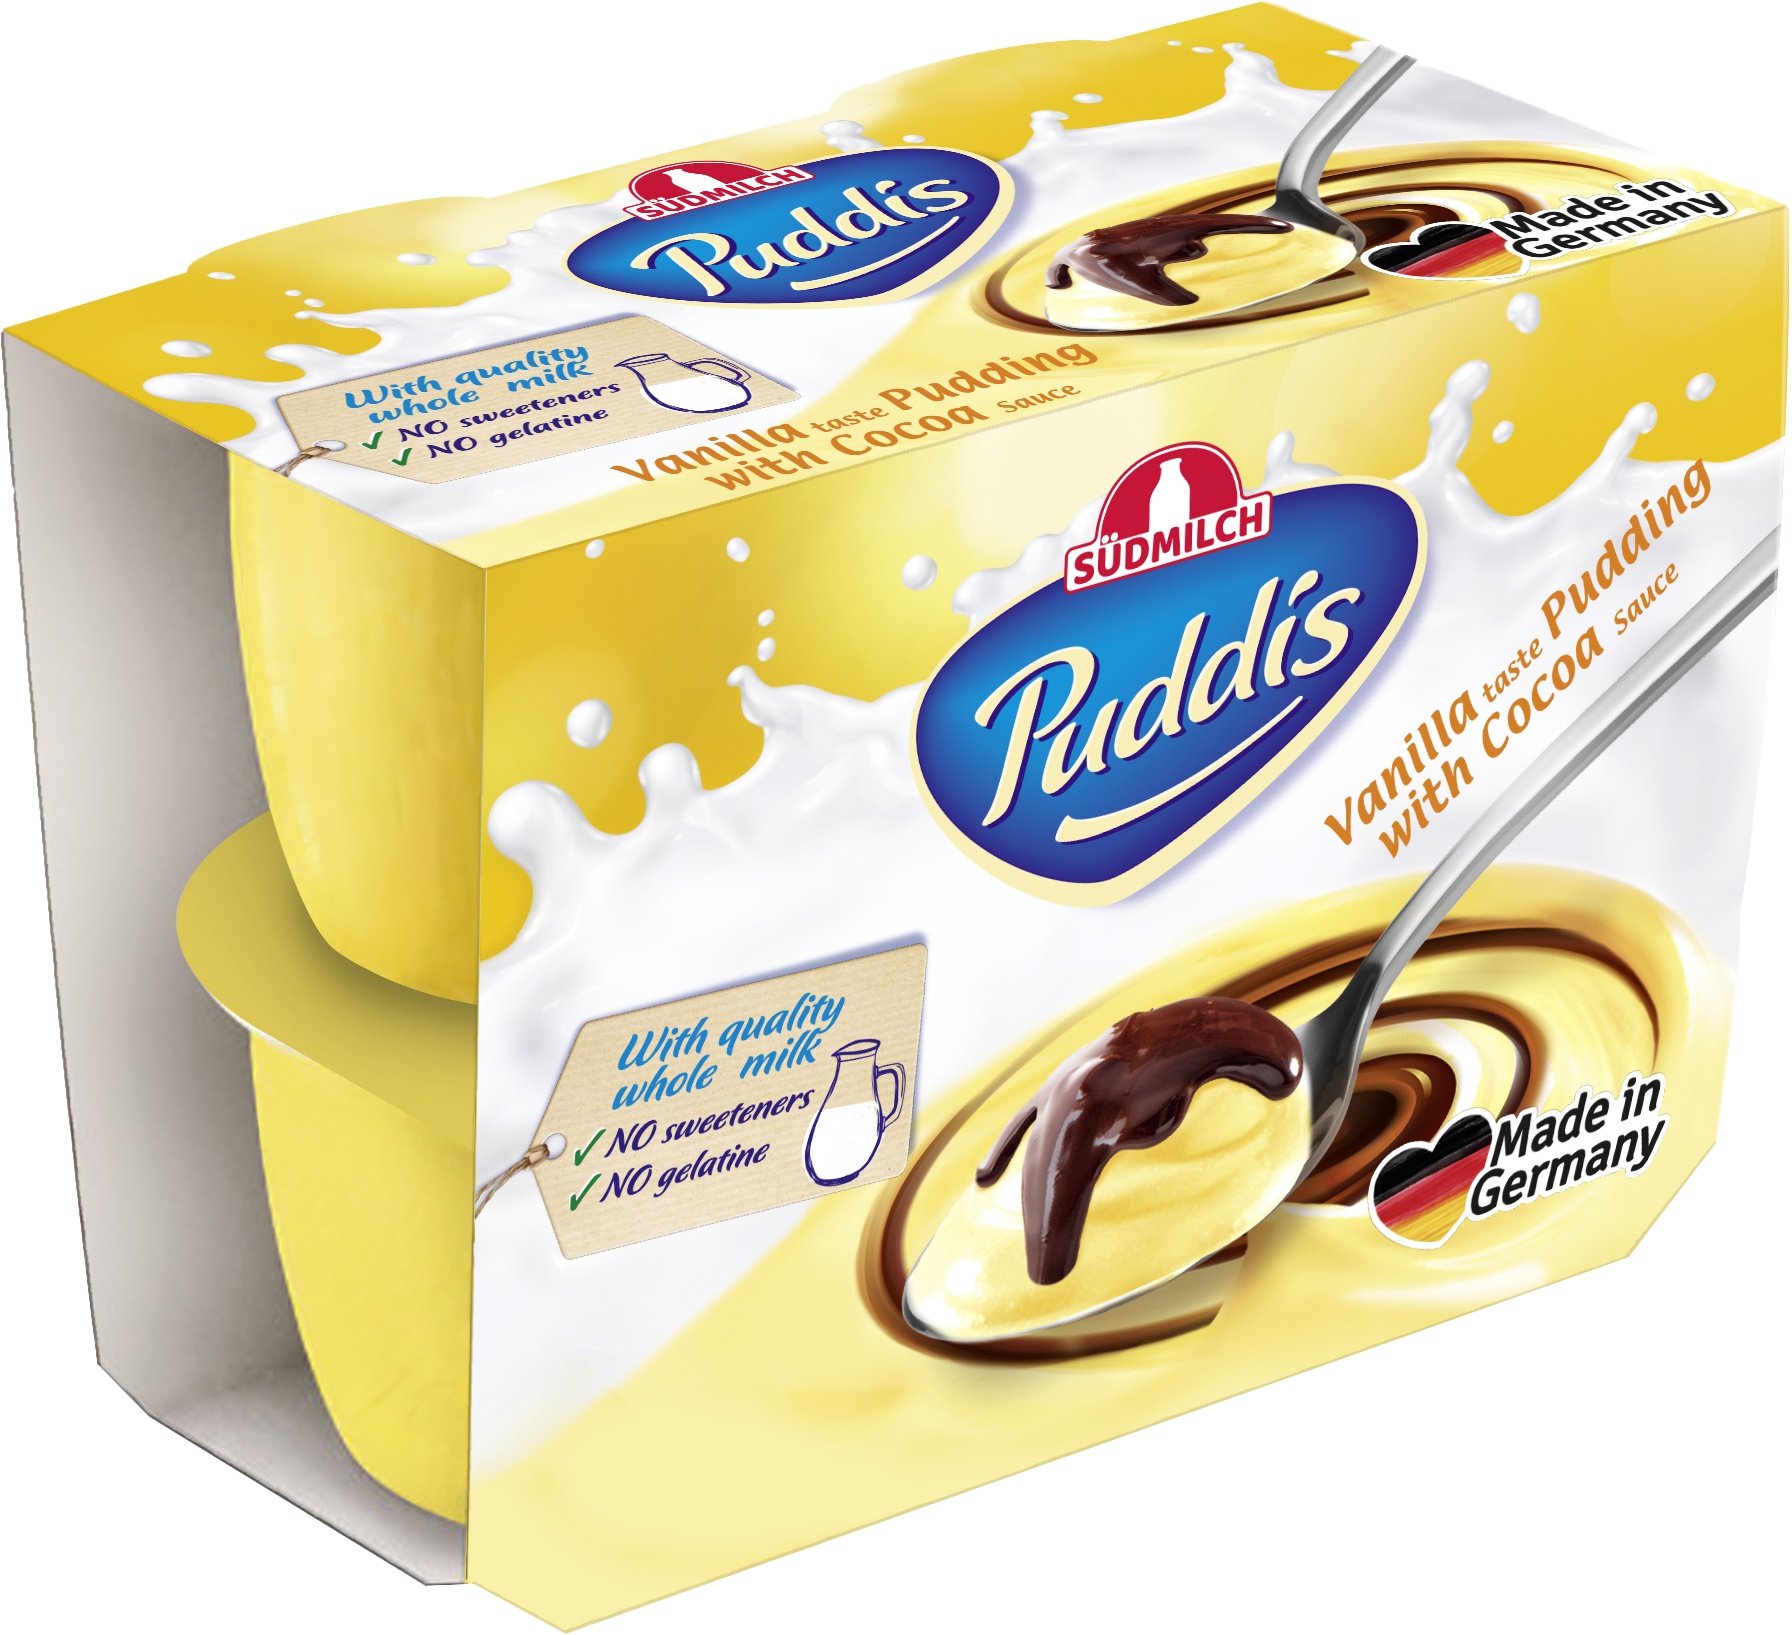 Slika za Puding Puddis vanila i čokolada 4x125g